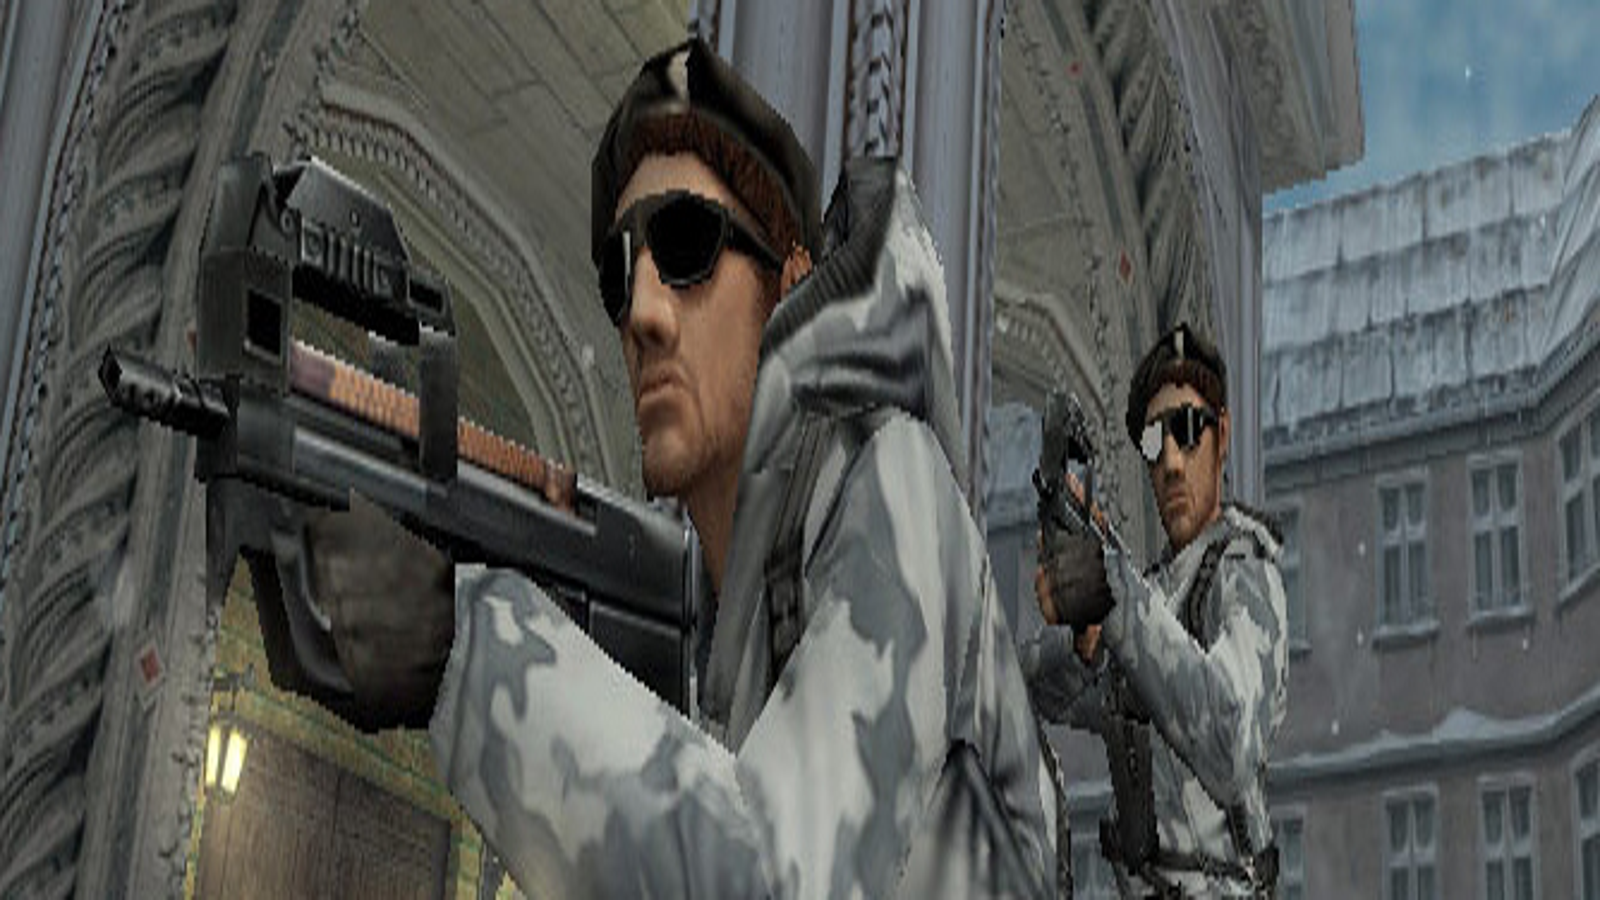 Counter-Strike: Condition Zero Gameplay PC HD 